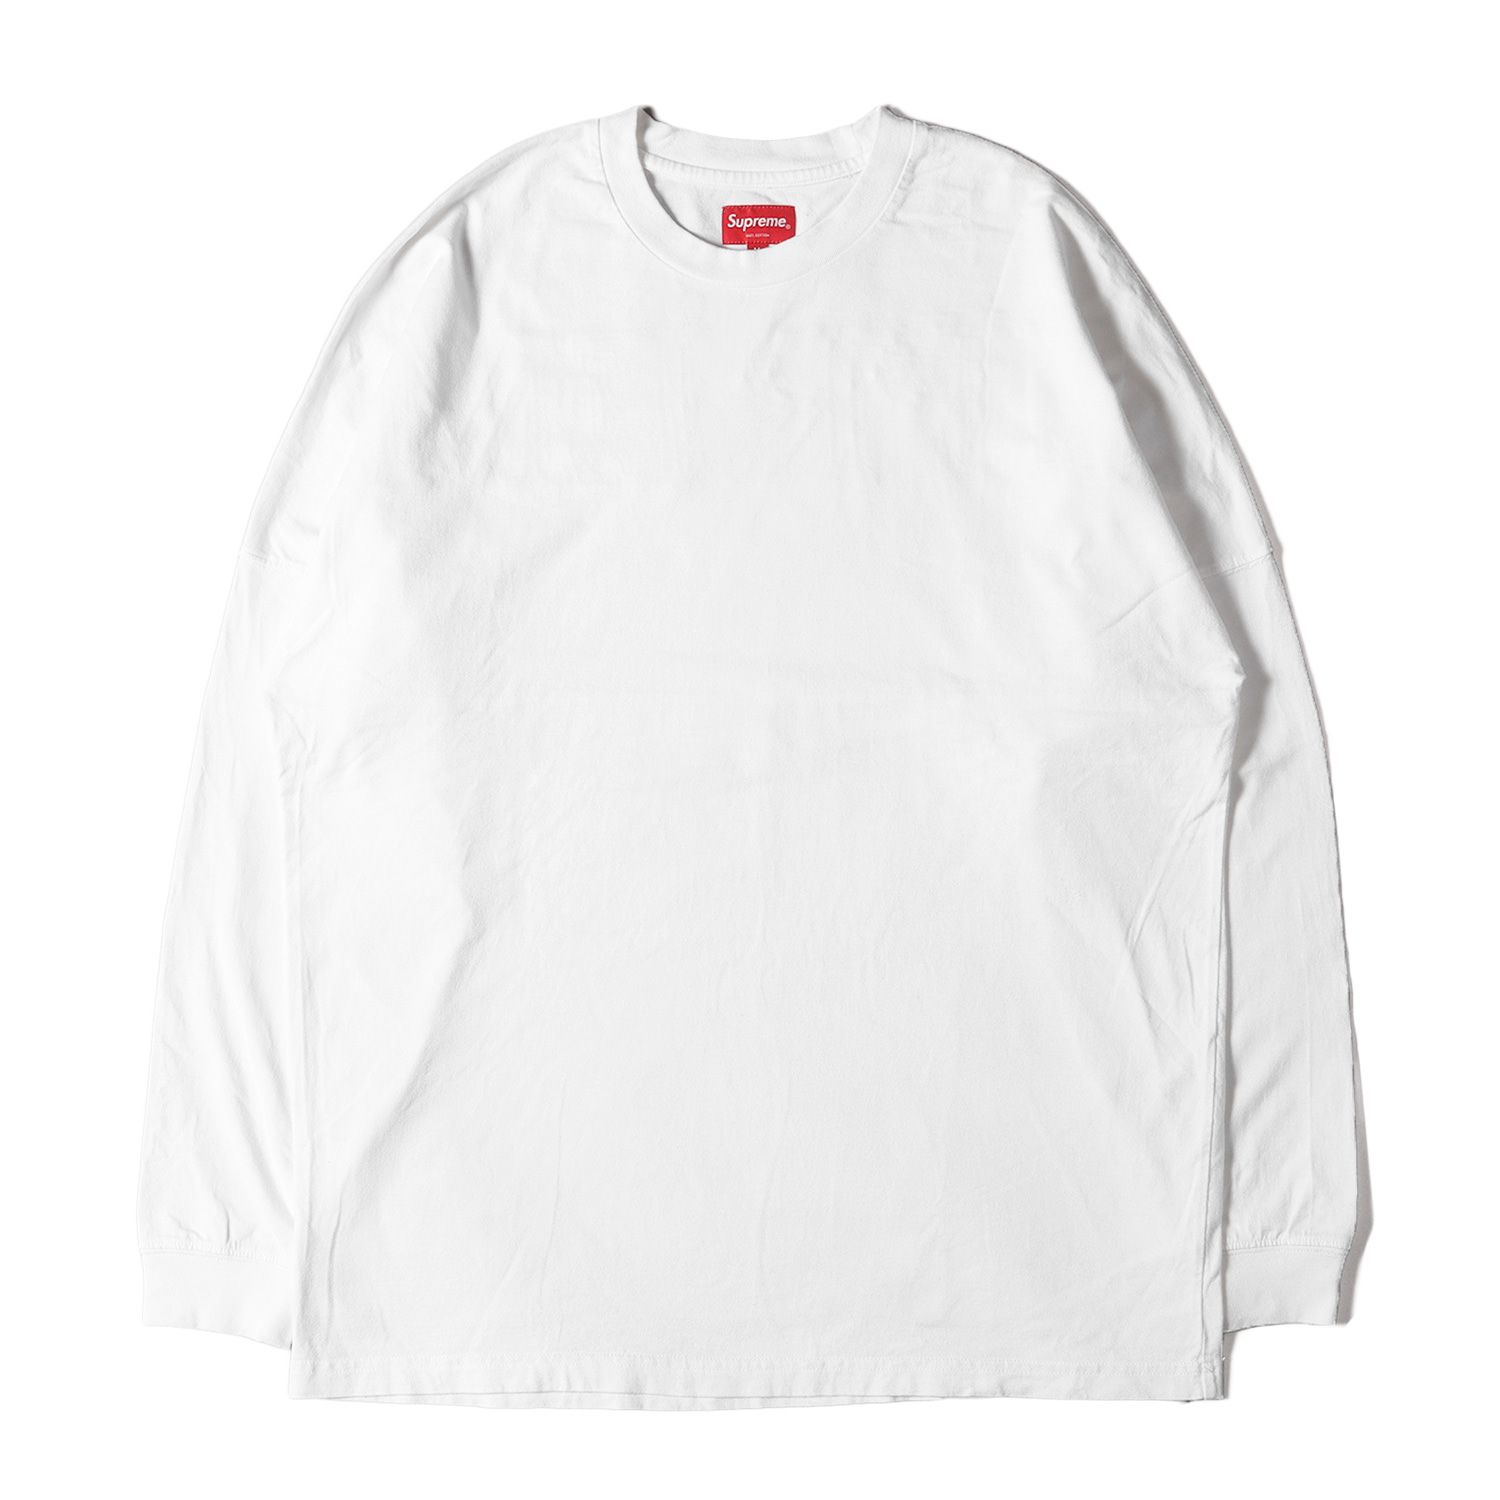 Supreme シュプリーム Tシャツ サイズ:M オーバーダイ加工 バックロゴ ロングスリーブ 長袖 クルーネック (Overdyed L/S  Top) 20SS ホワイト 白 ロンT トップス シンプル ストリート カジュアル ブランド